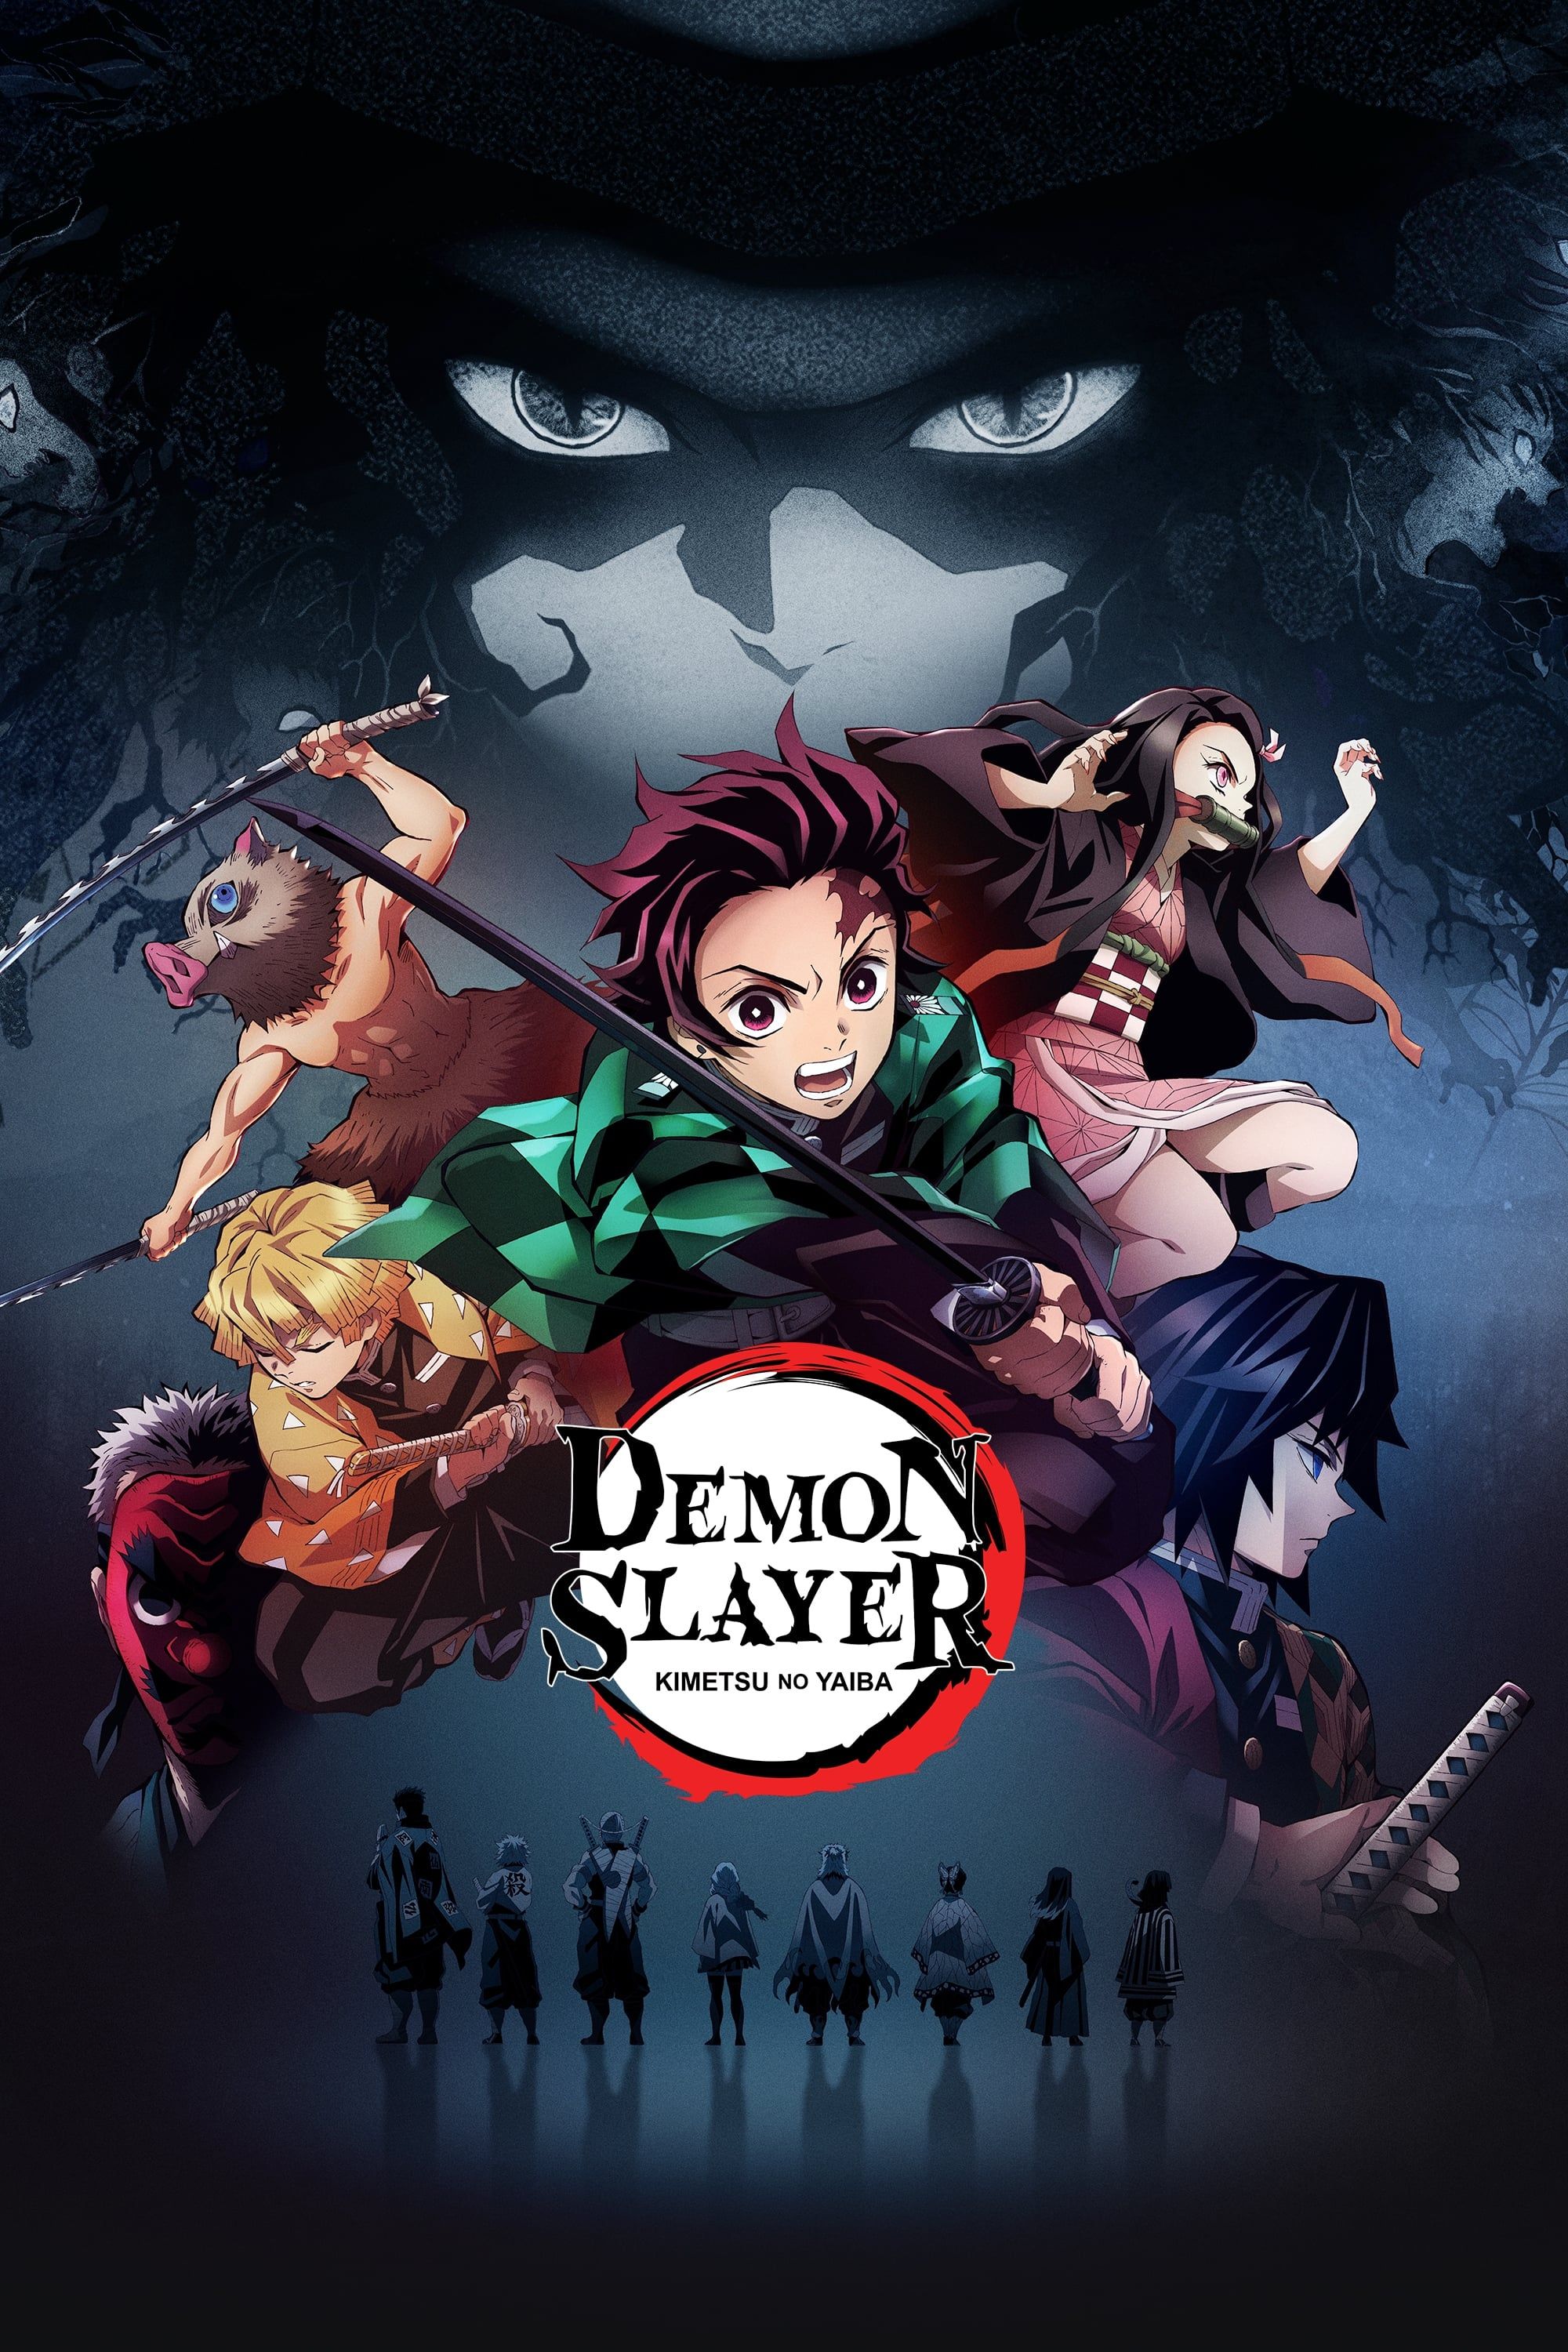 Poster for the anime series “Demon Slayer”